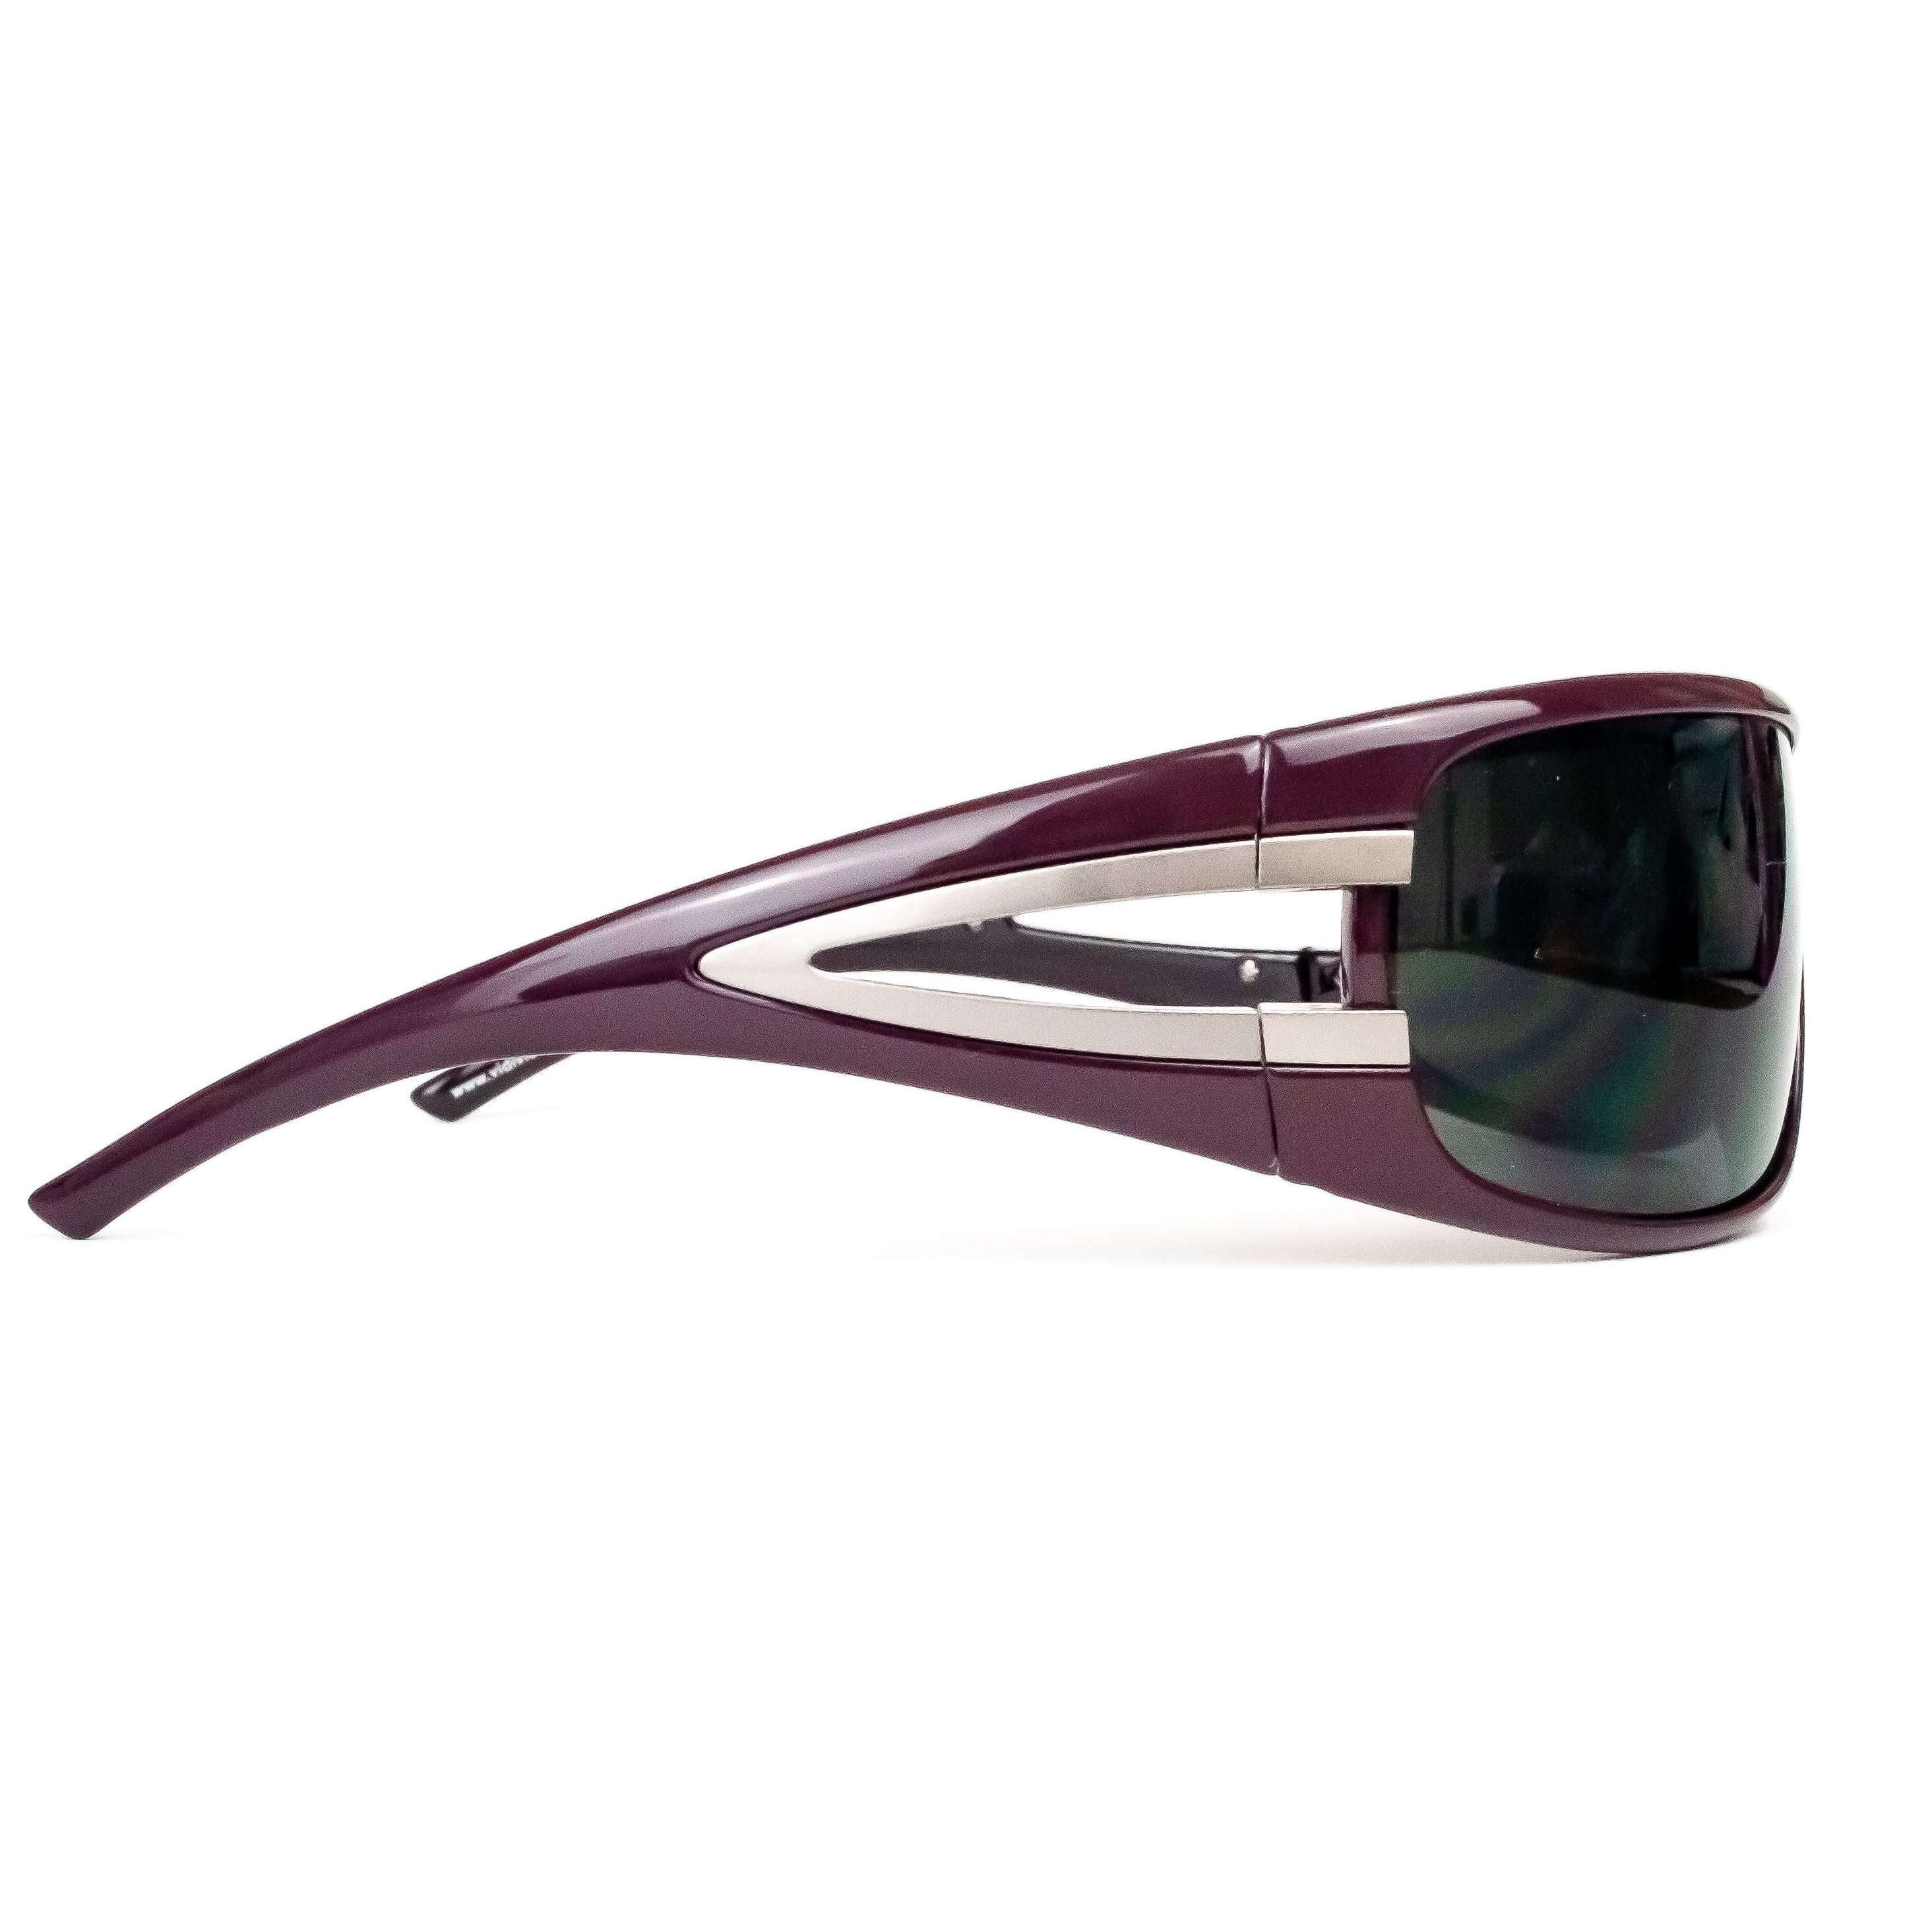 Vidi Vici Model VR Flo Wraparound Sunglasses